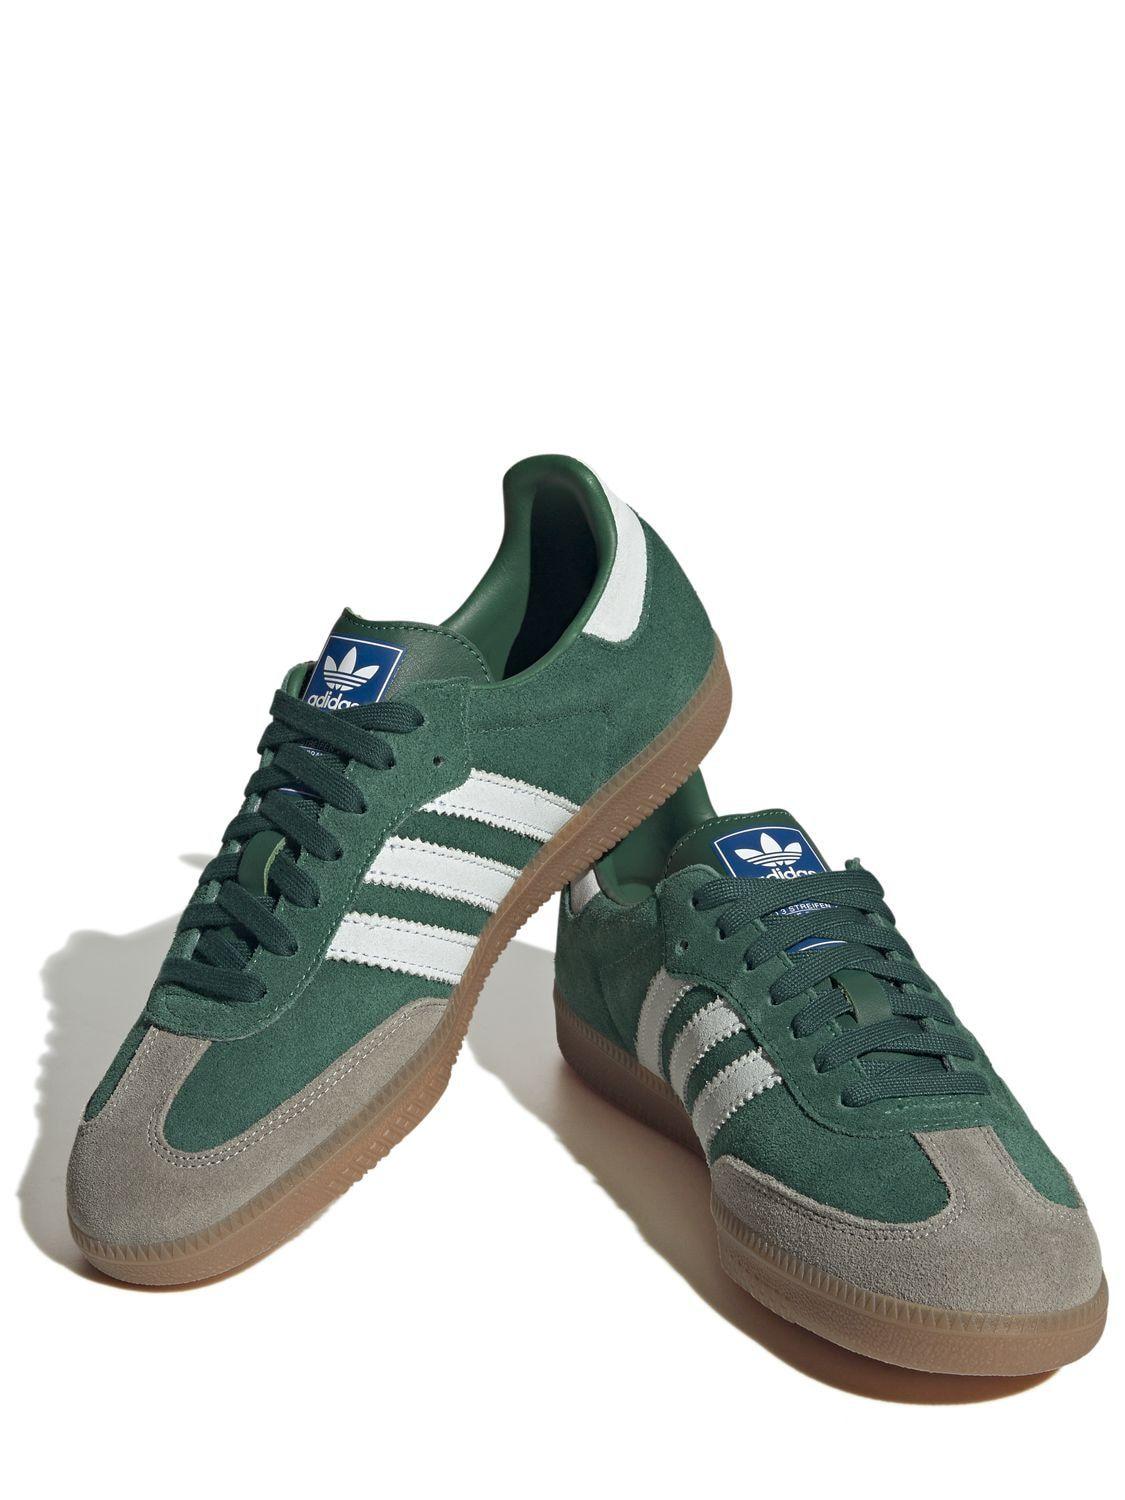 Adidas Samba OG Court Green Sneakers - Farfetch